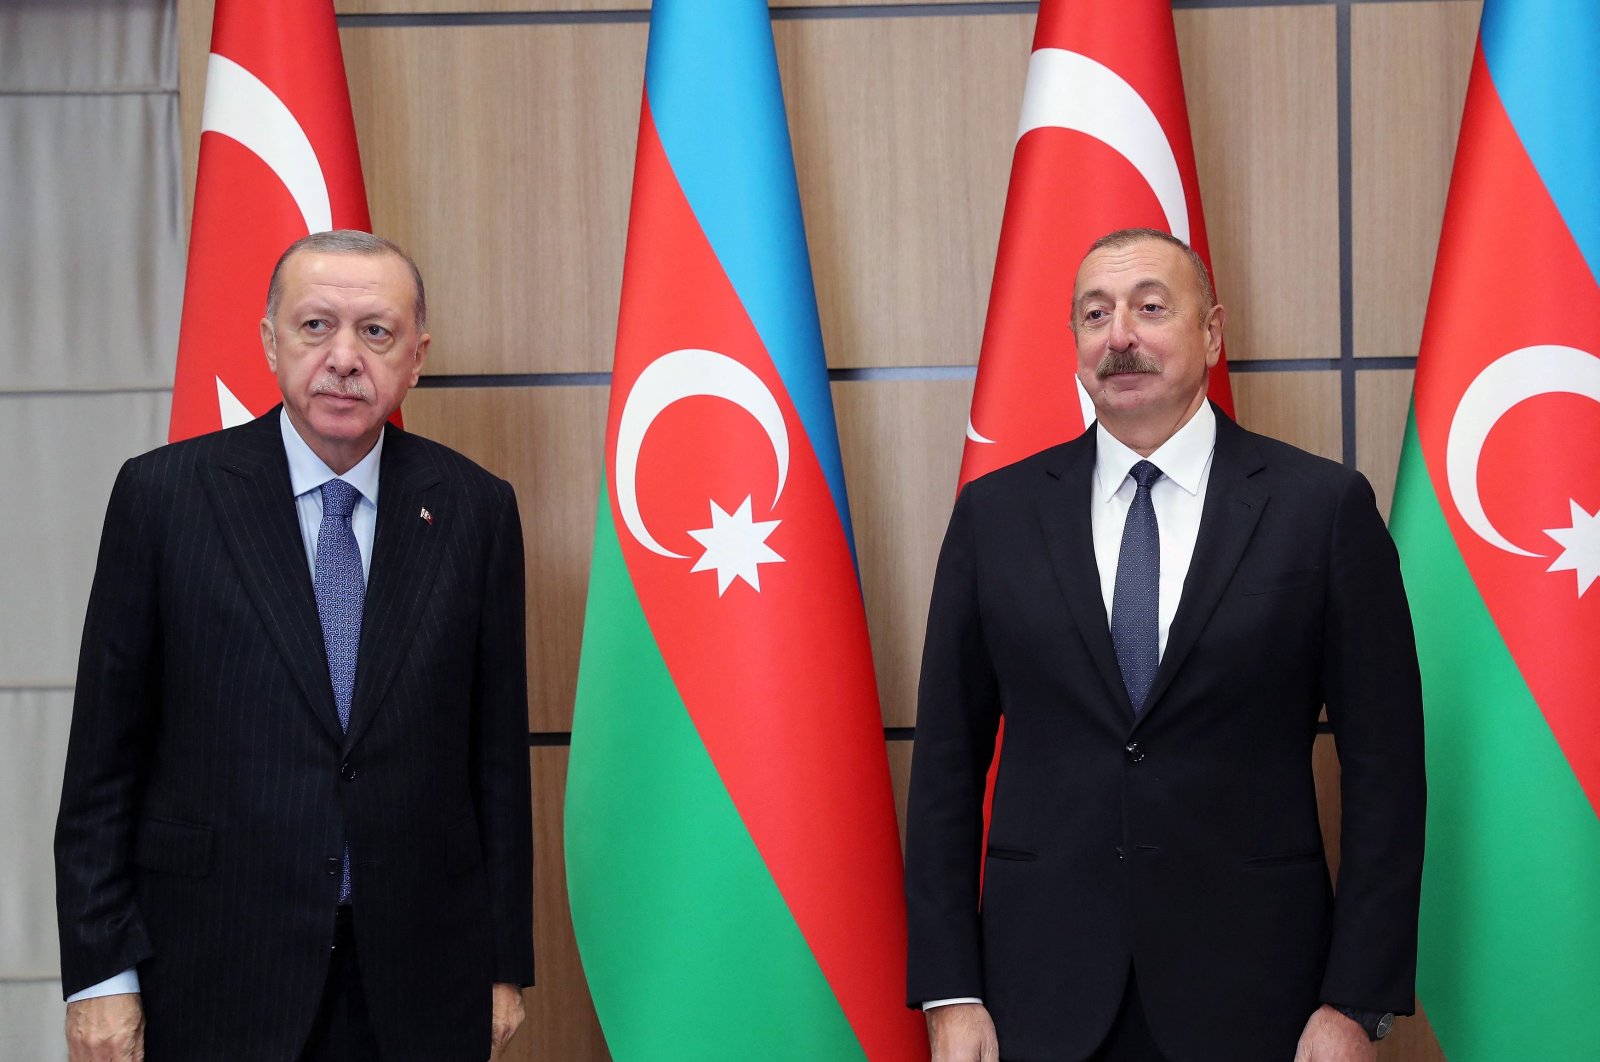  President Recep Tayyip Erdoğan (R) and Azerbaijan's President Ilham Aliyev (L) are seen during an official ceremony in Zangilan, Azerbaijan, Oct. 26, 2021. (AFP Photo)